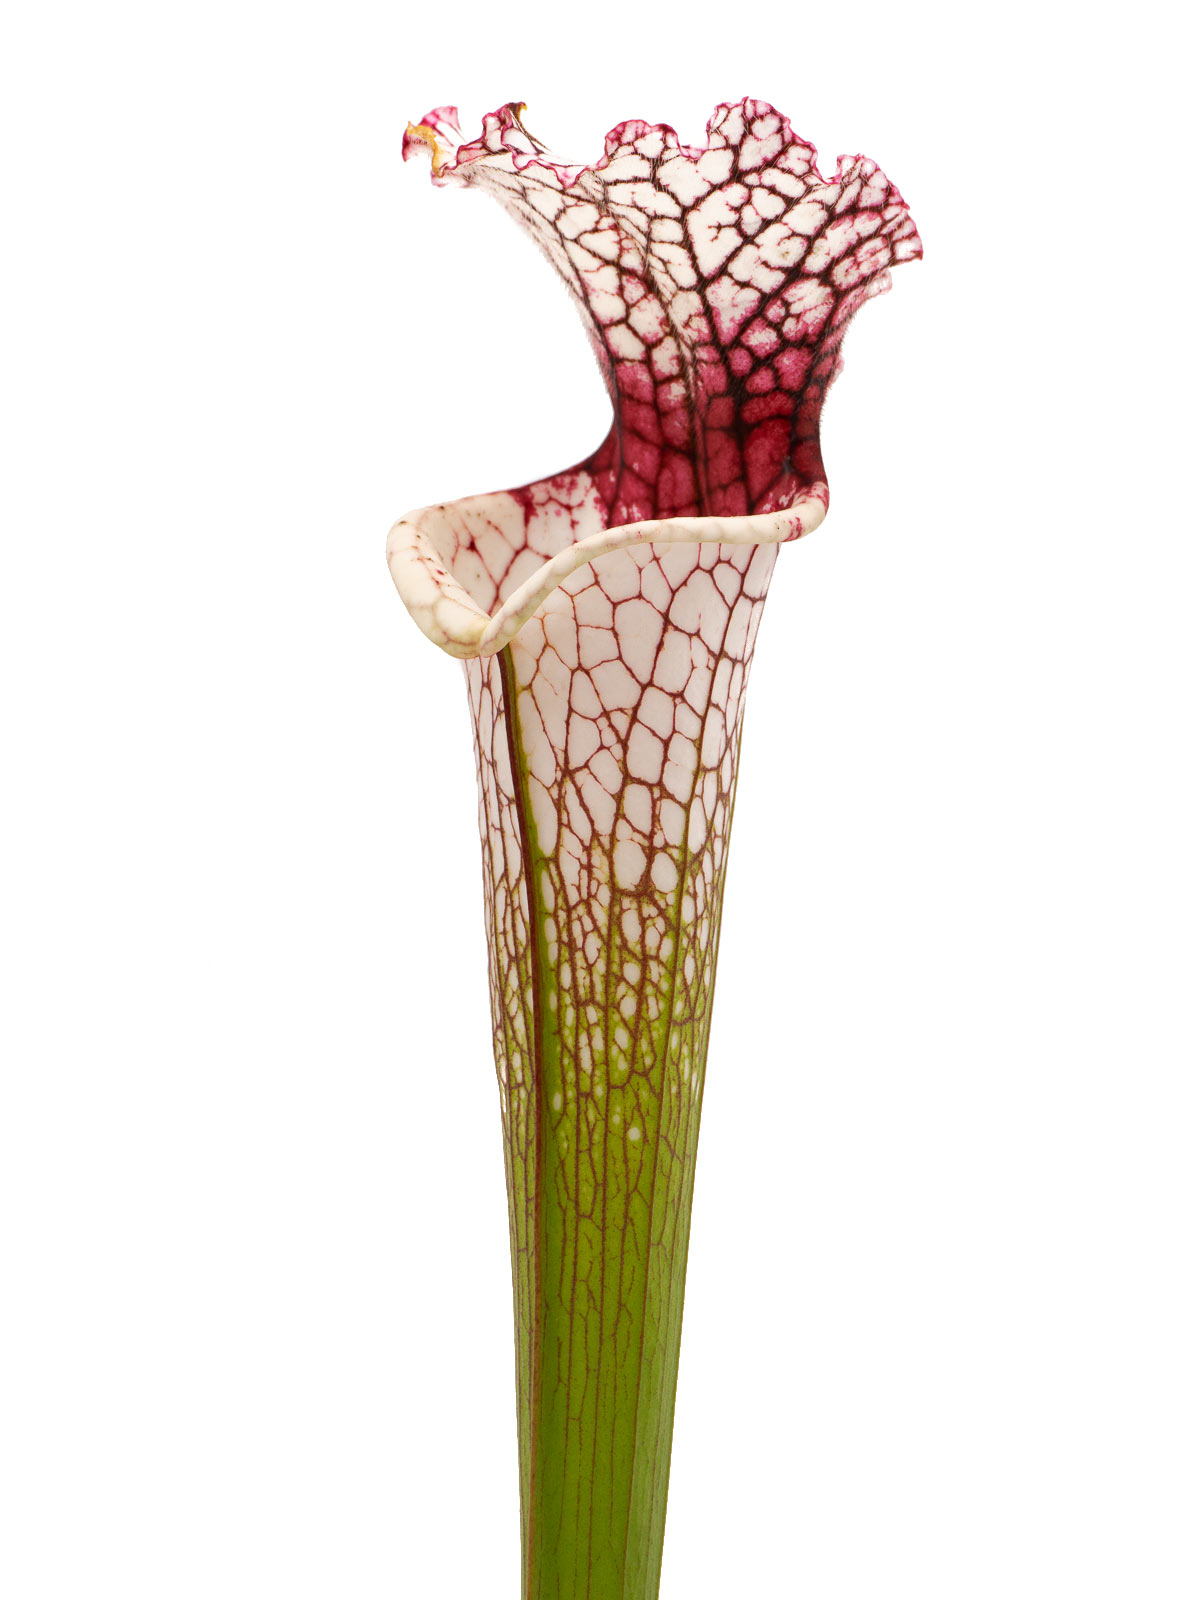 S. leucophylla - MK L111, red stripe throat, Cedric Azais